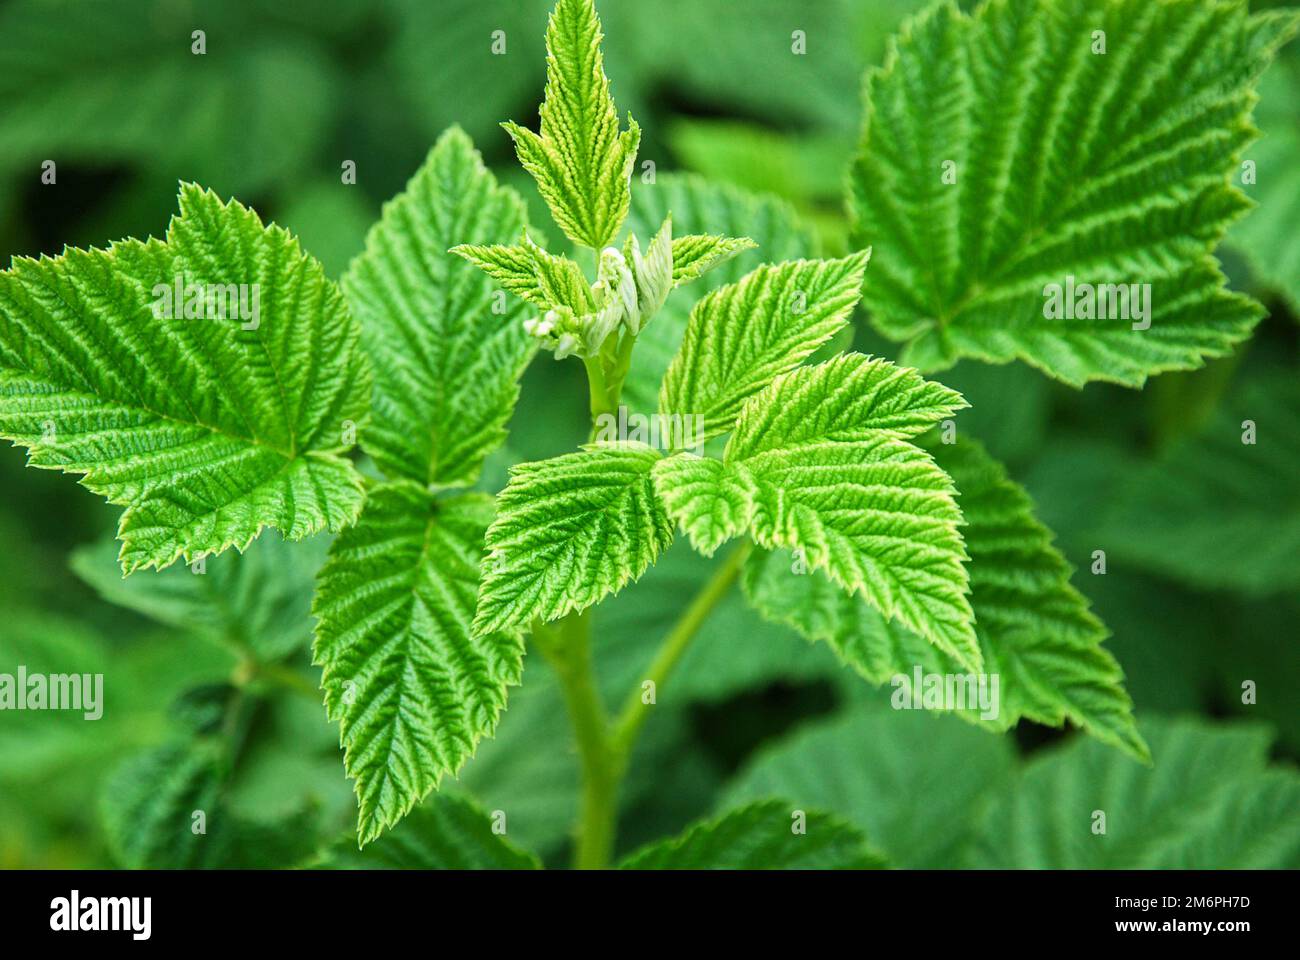 https://c8.alamy.com/comp/2M6PH7D/raspberry-plant-green-leaves-in-the-garden-2M6PH7D.jpg